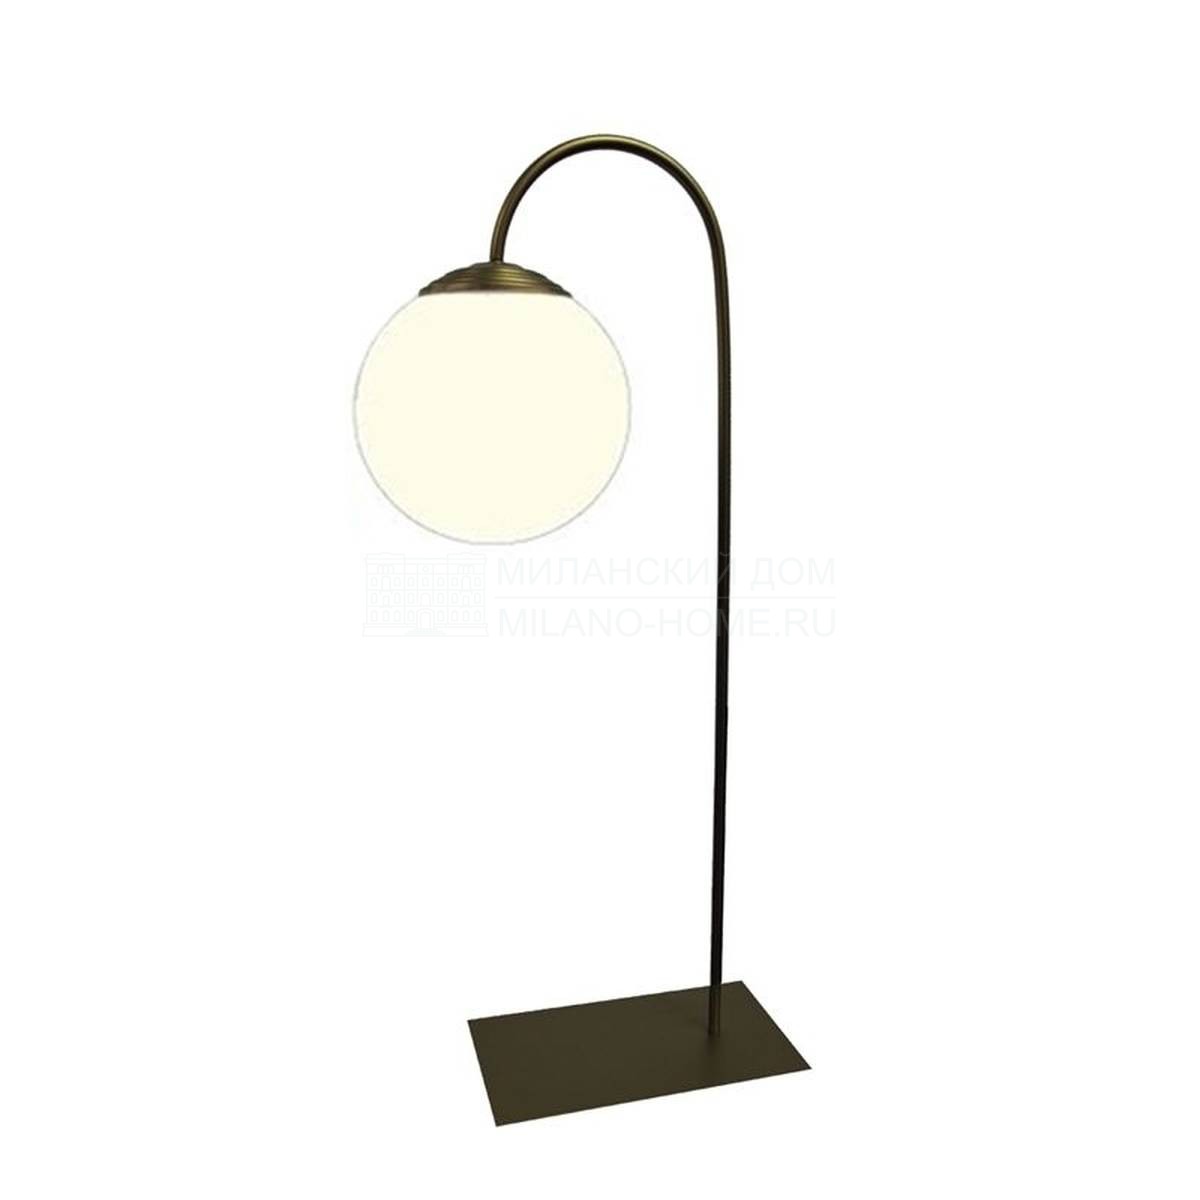 Настольная лампа H-70595 table lamp из Испании фабрики GUADARTE